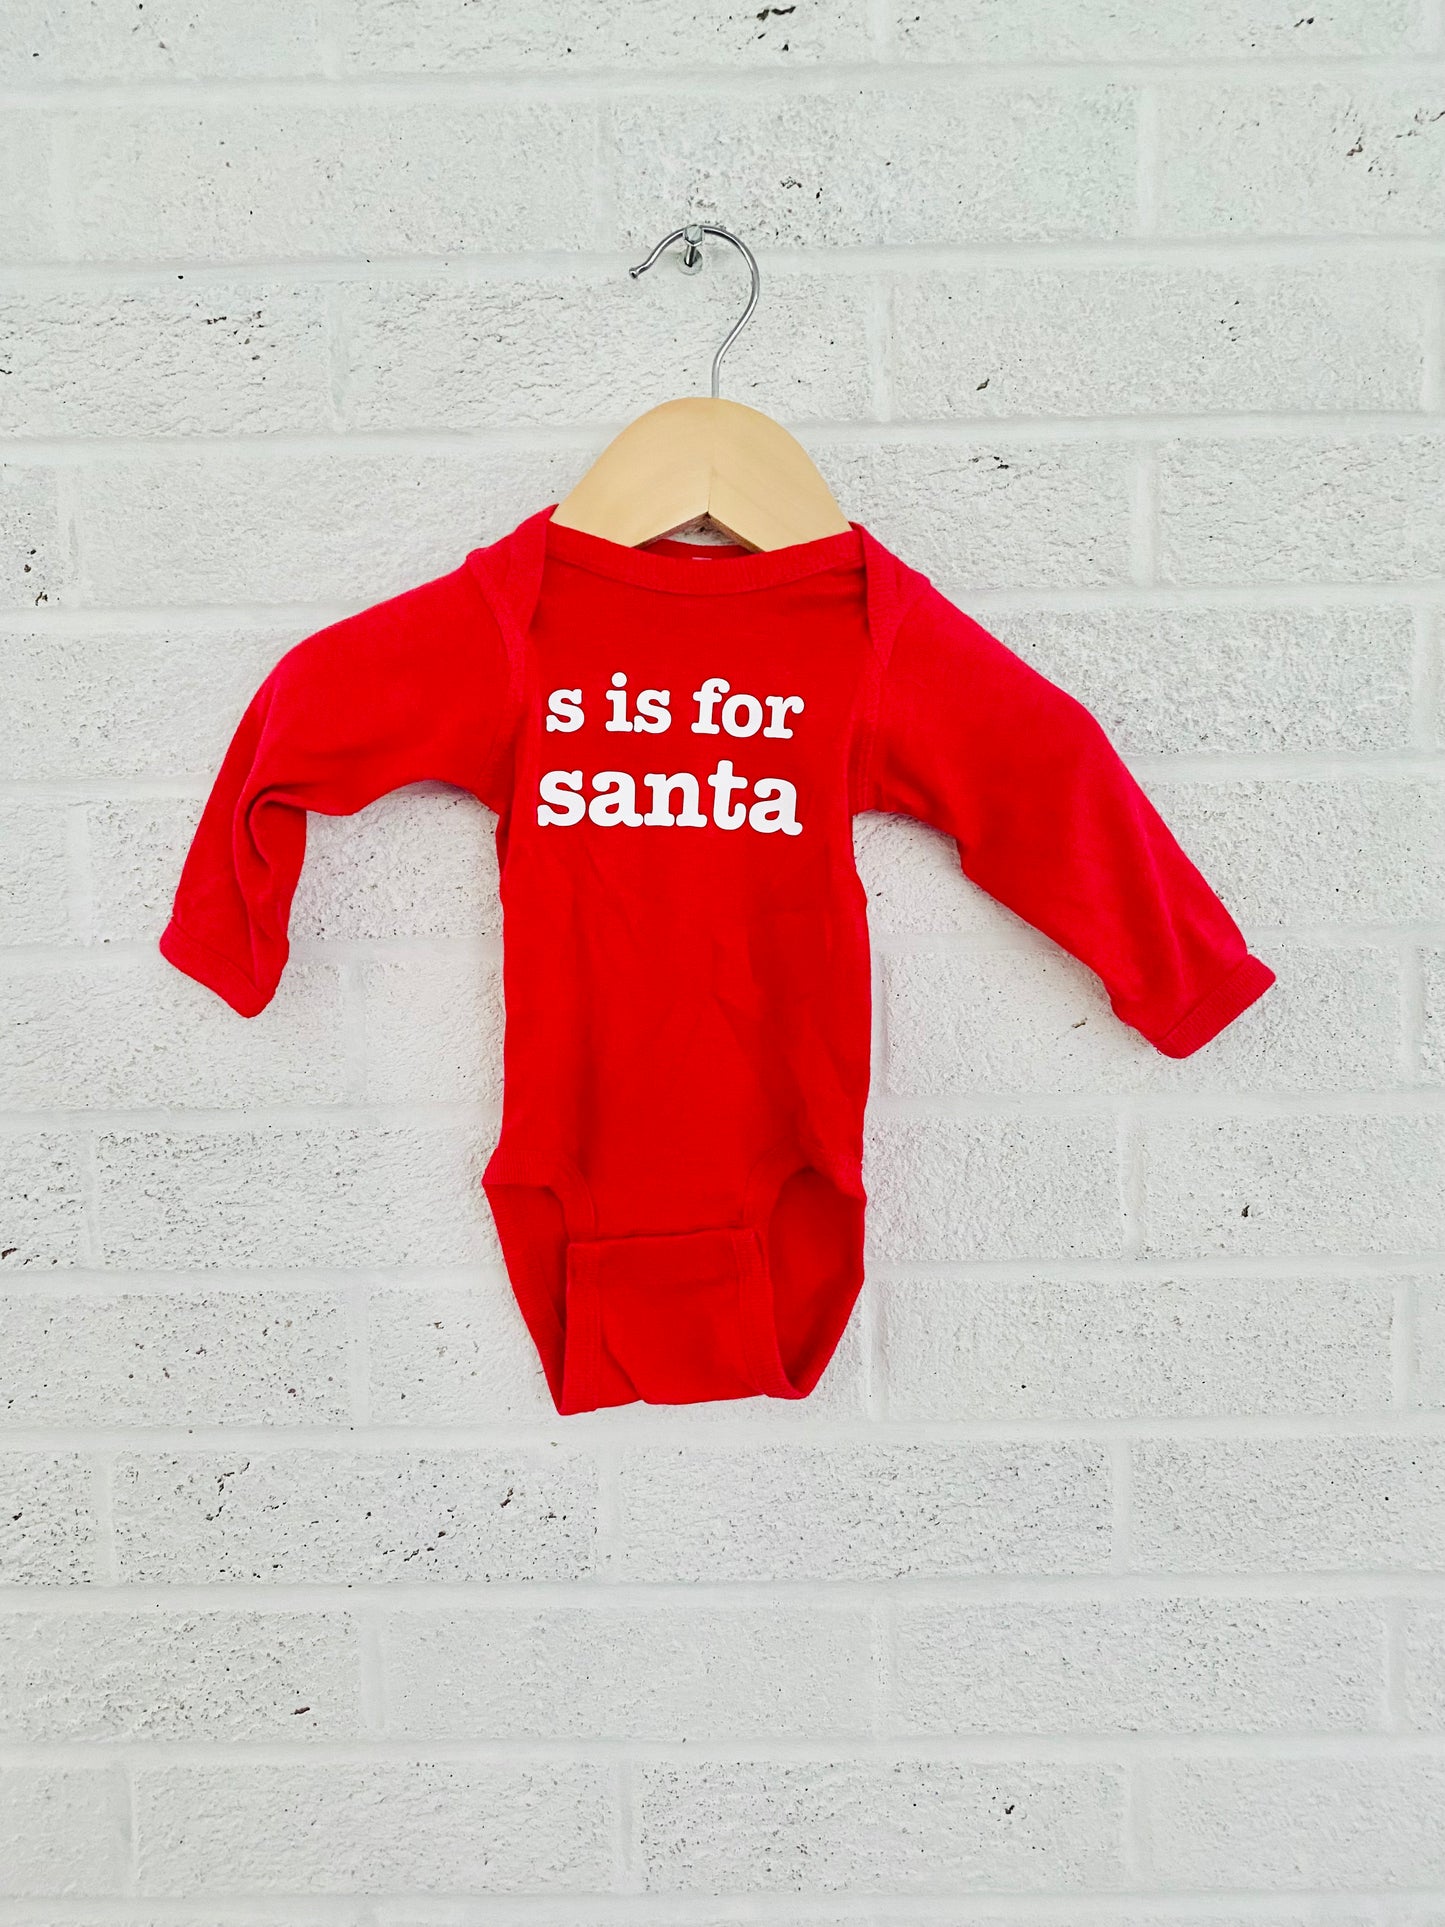 S is for Santa Baby Bodysuit